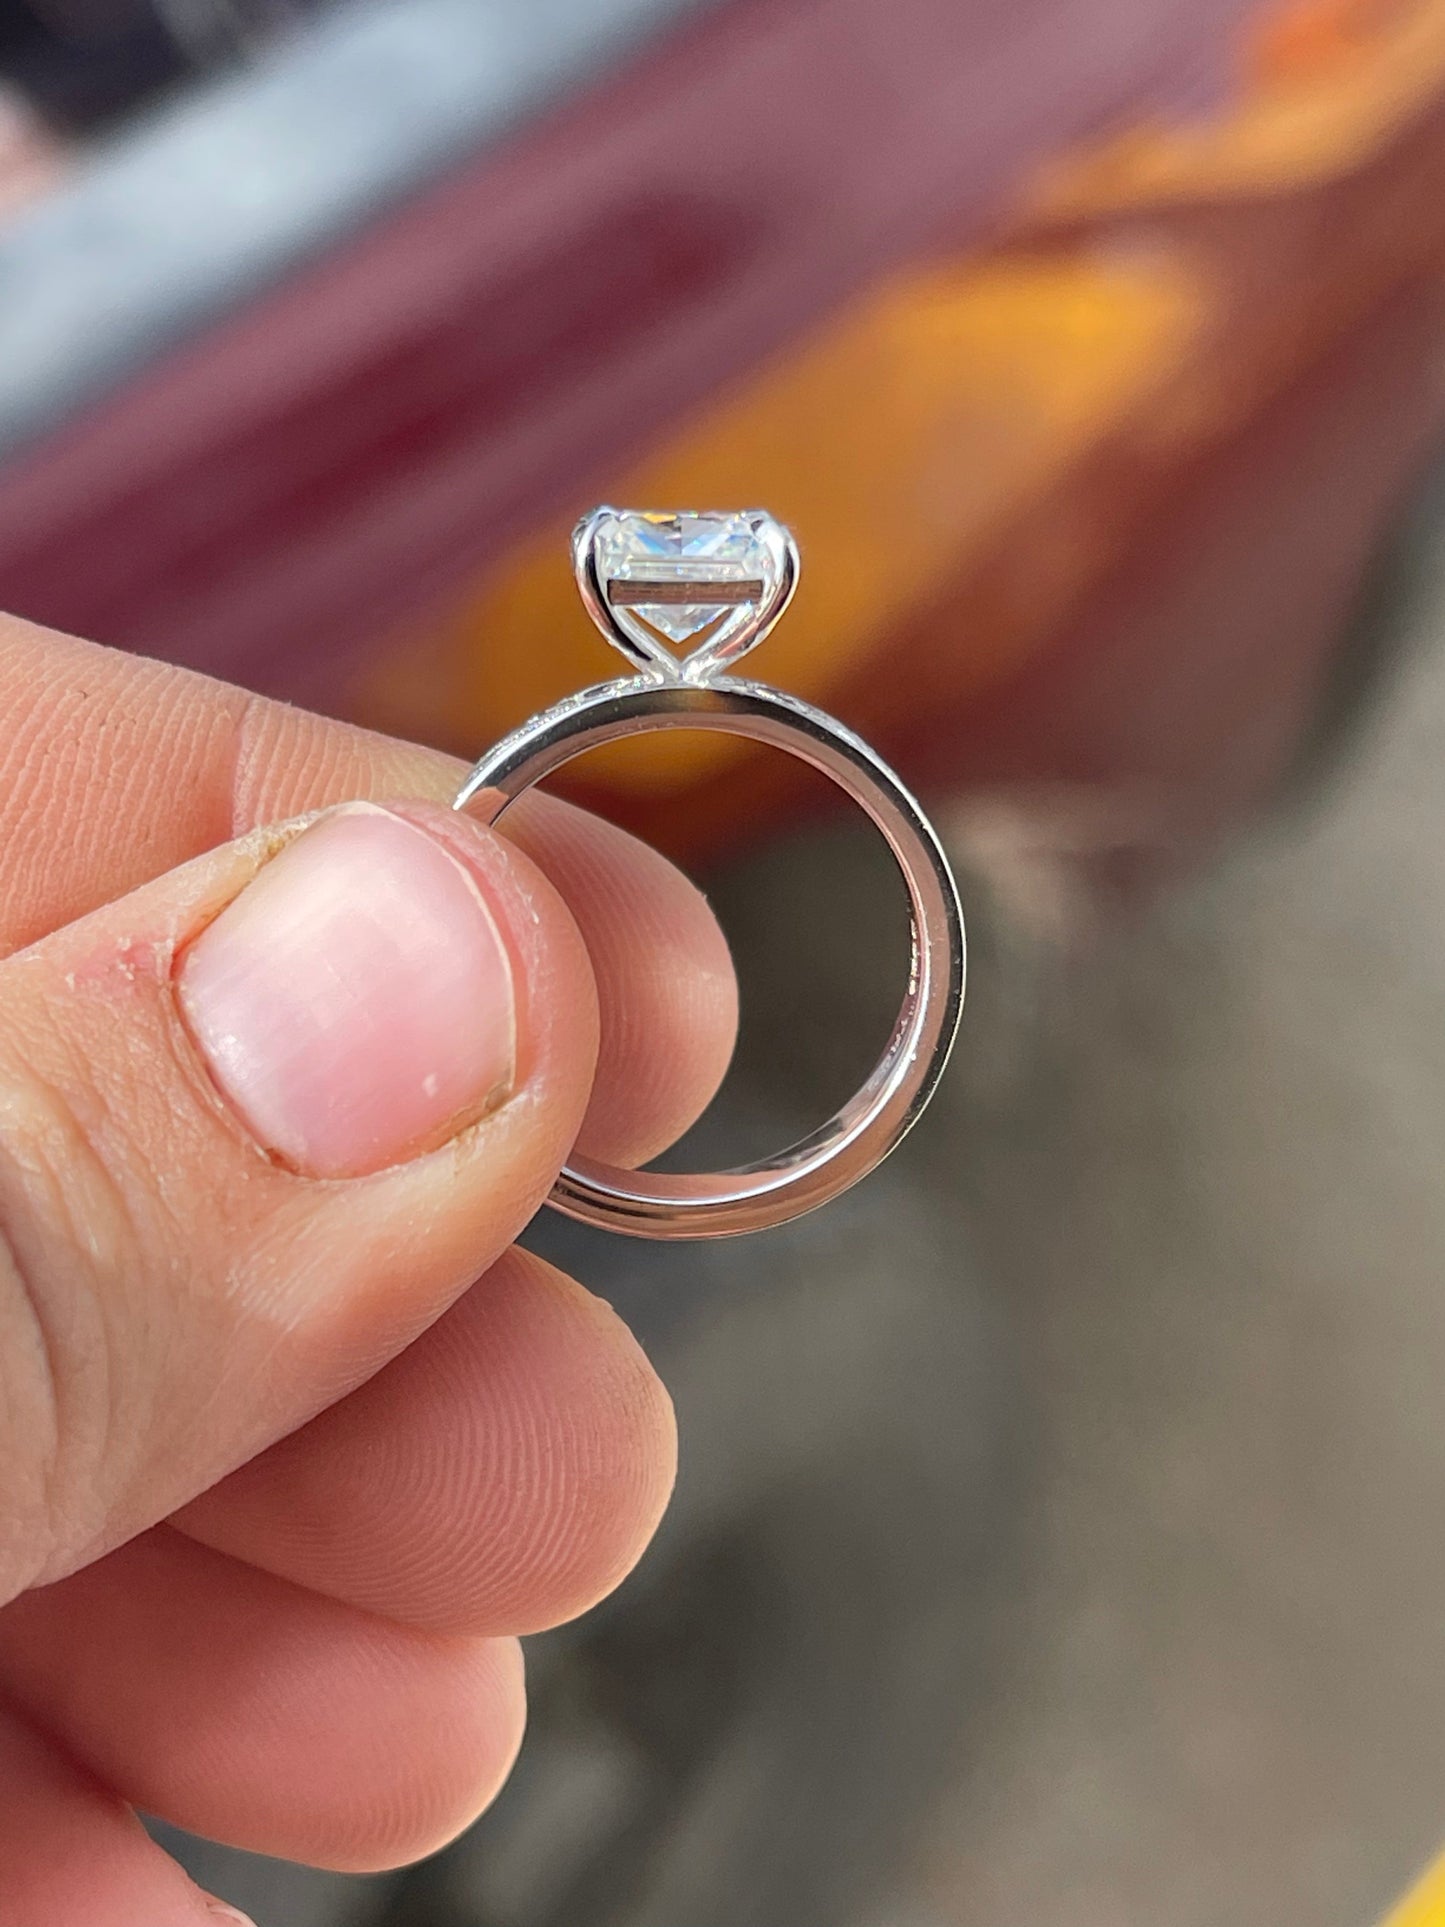 Priscilla 9.25US 10K White Gold Engagement Ring